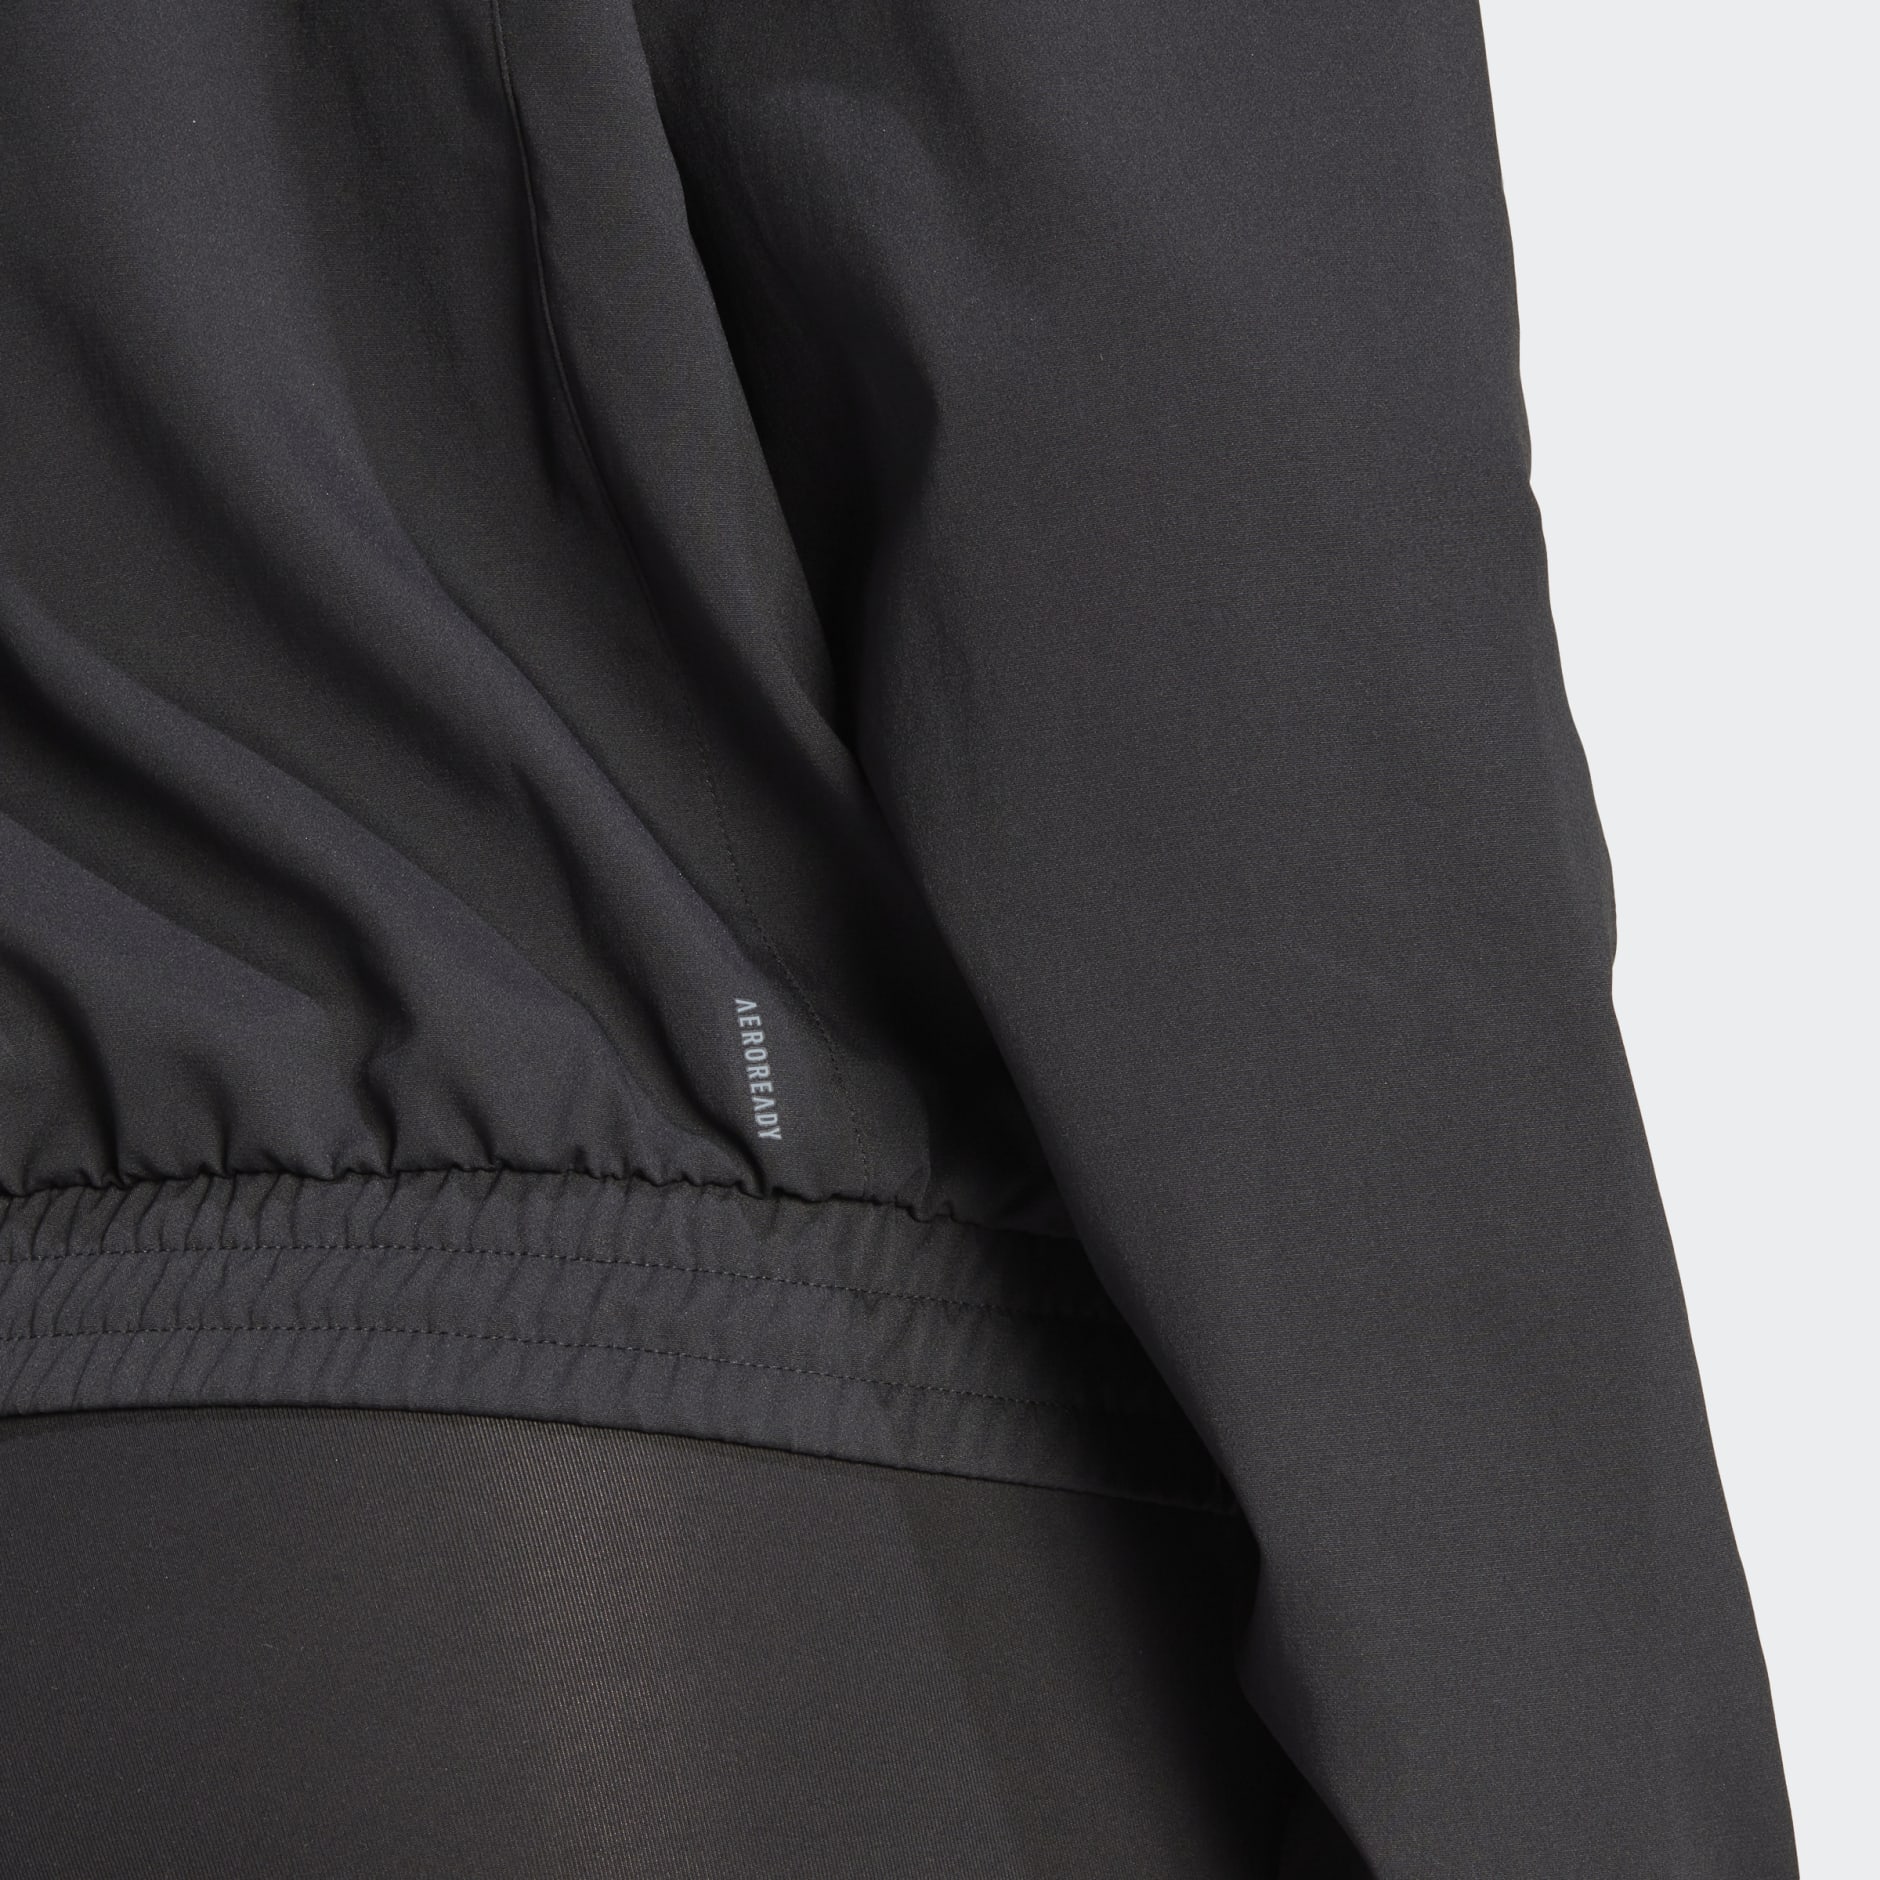 Woven - Black Track Train GH adidas Quarter-Zip adidas | Jacket Essentials AEROREADY